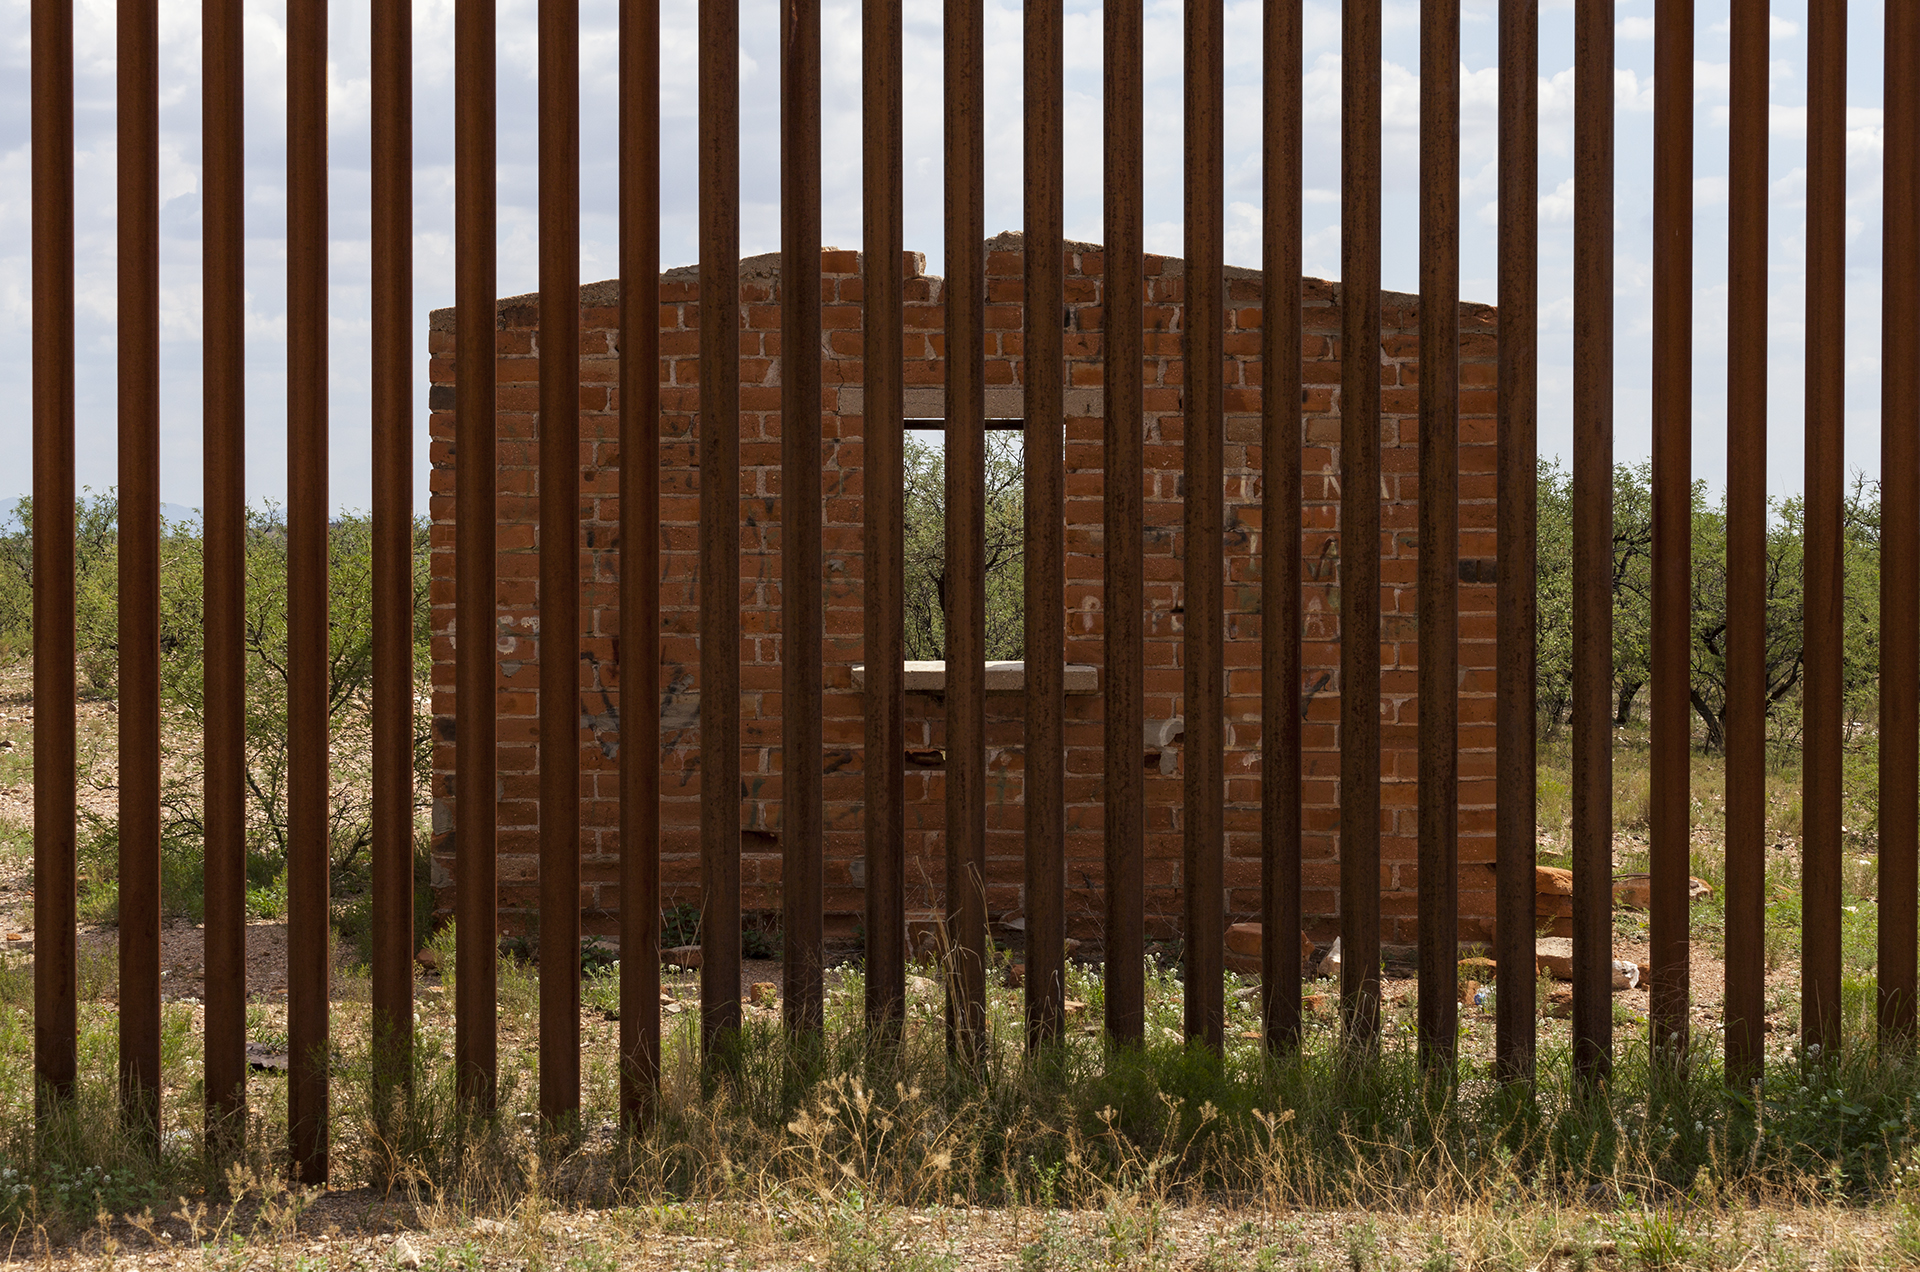  Looking into Mexico Through the Border Fence, 2012 